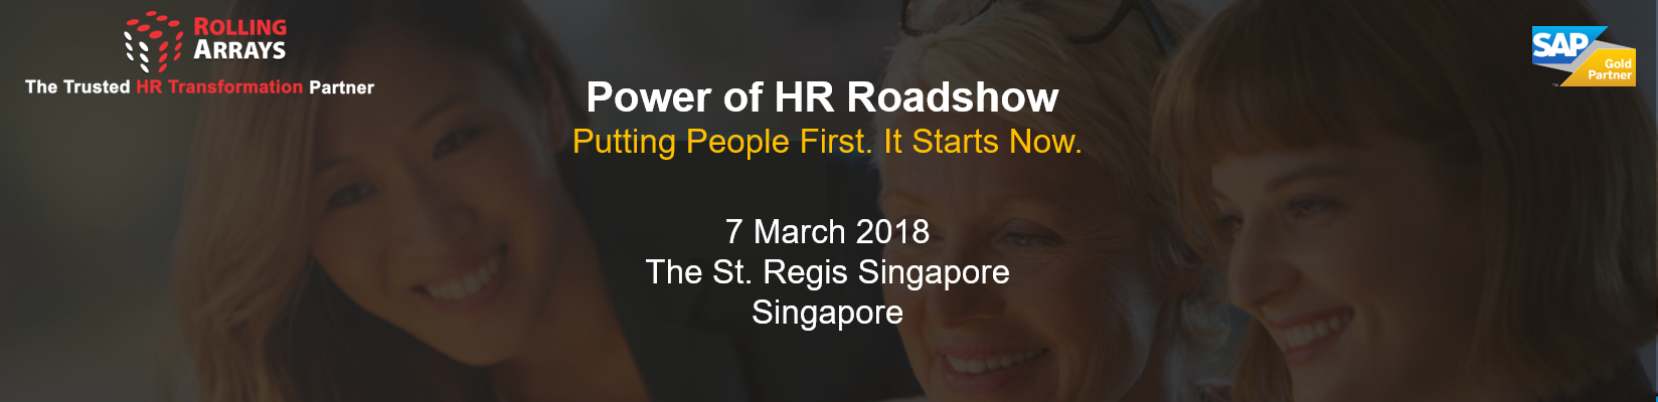 Power of HR Roadshow